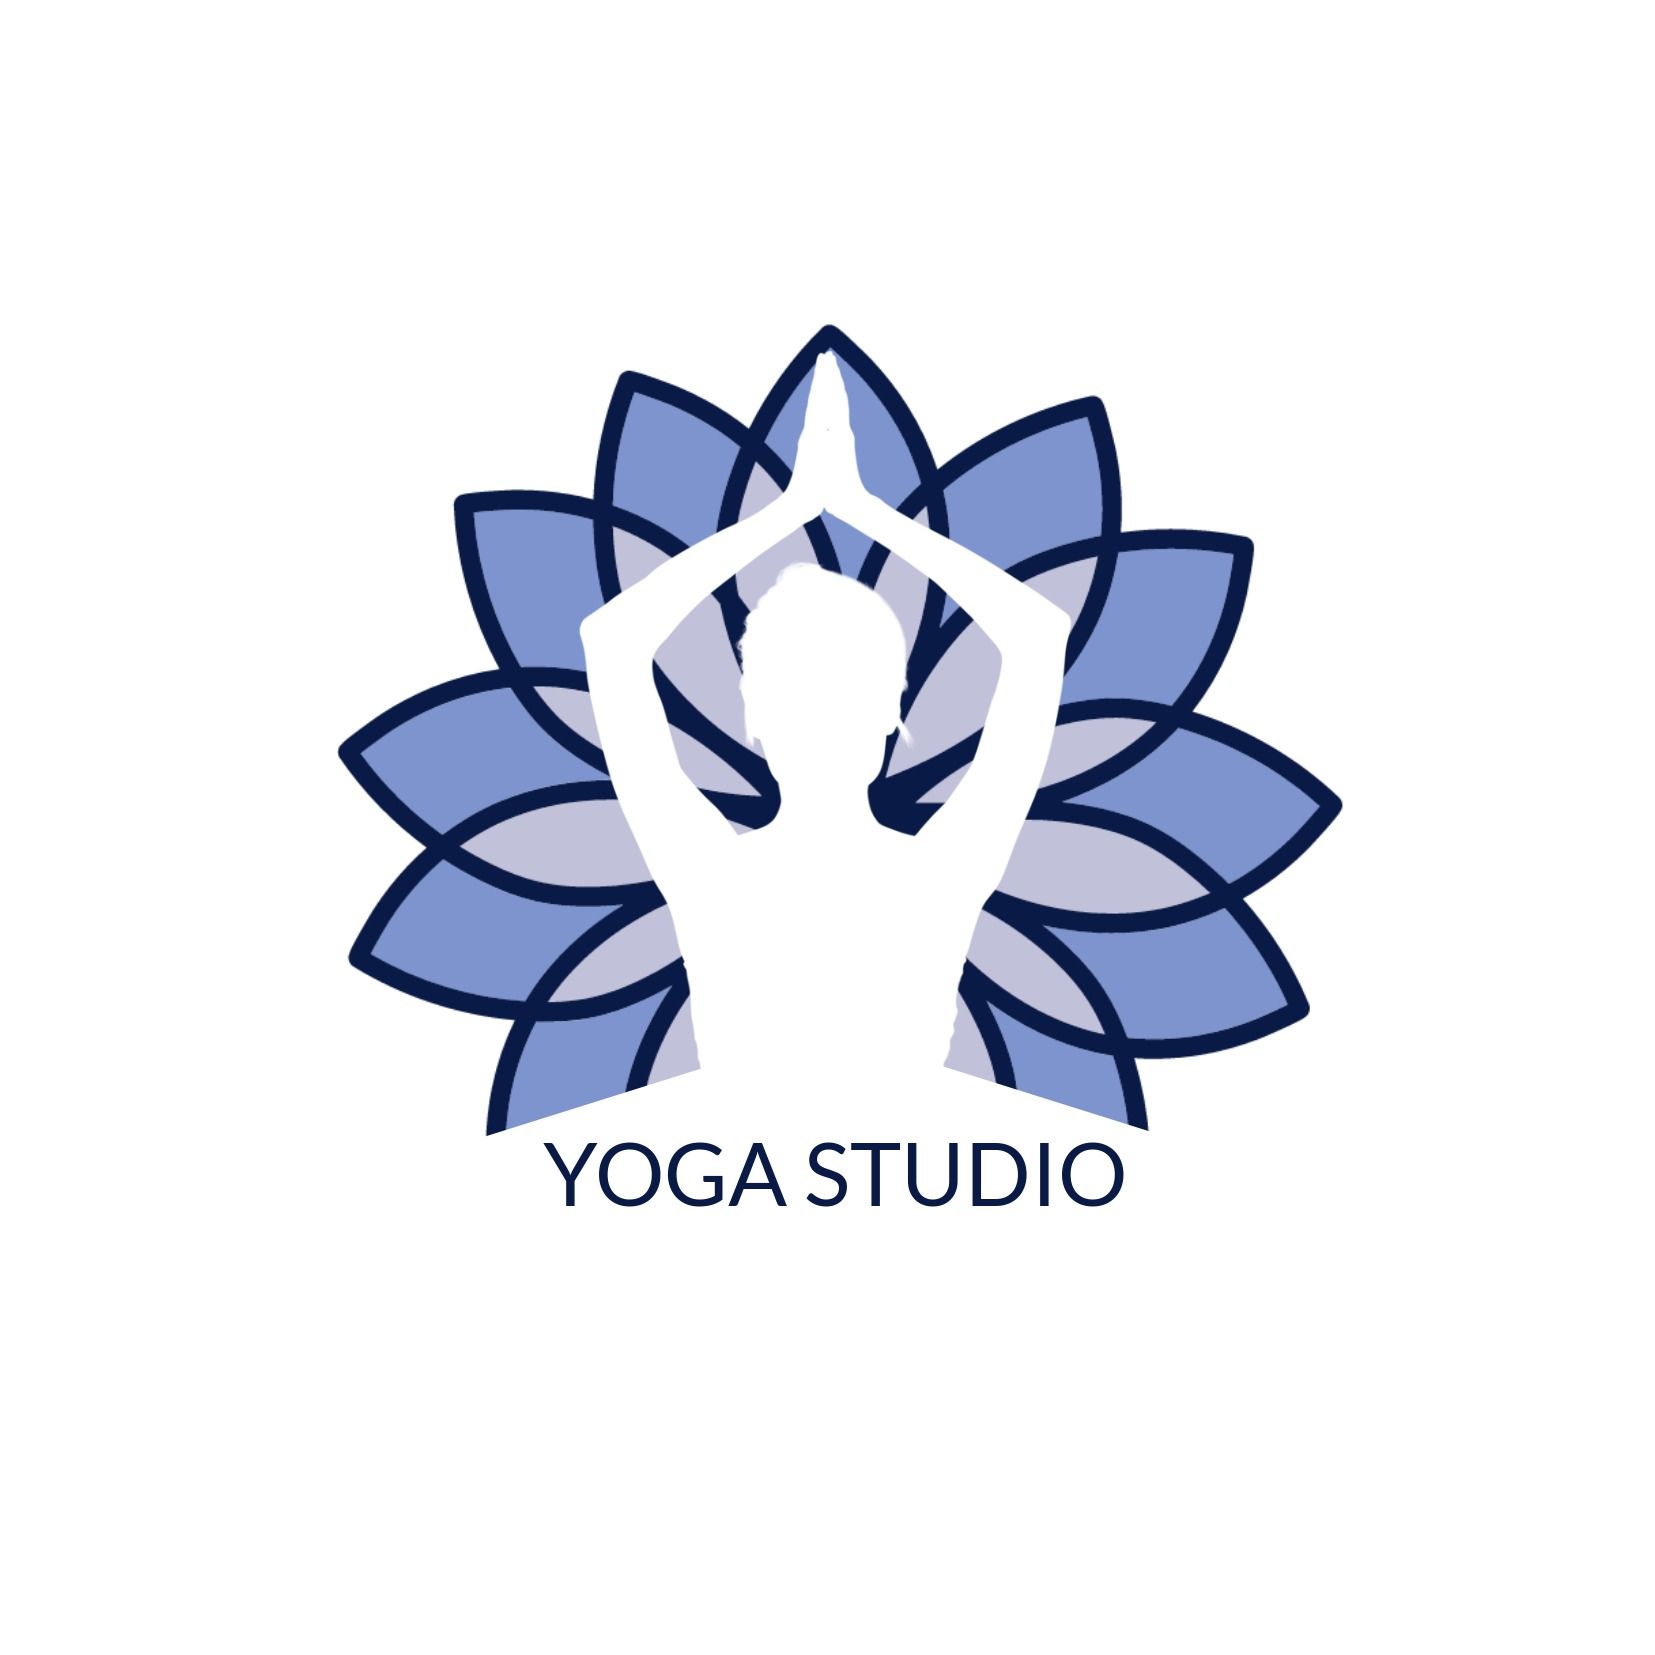 Designs de logotipos criativos para estúdio de ioga